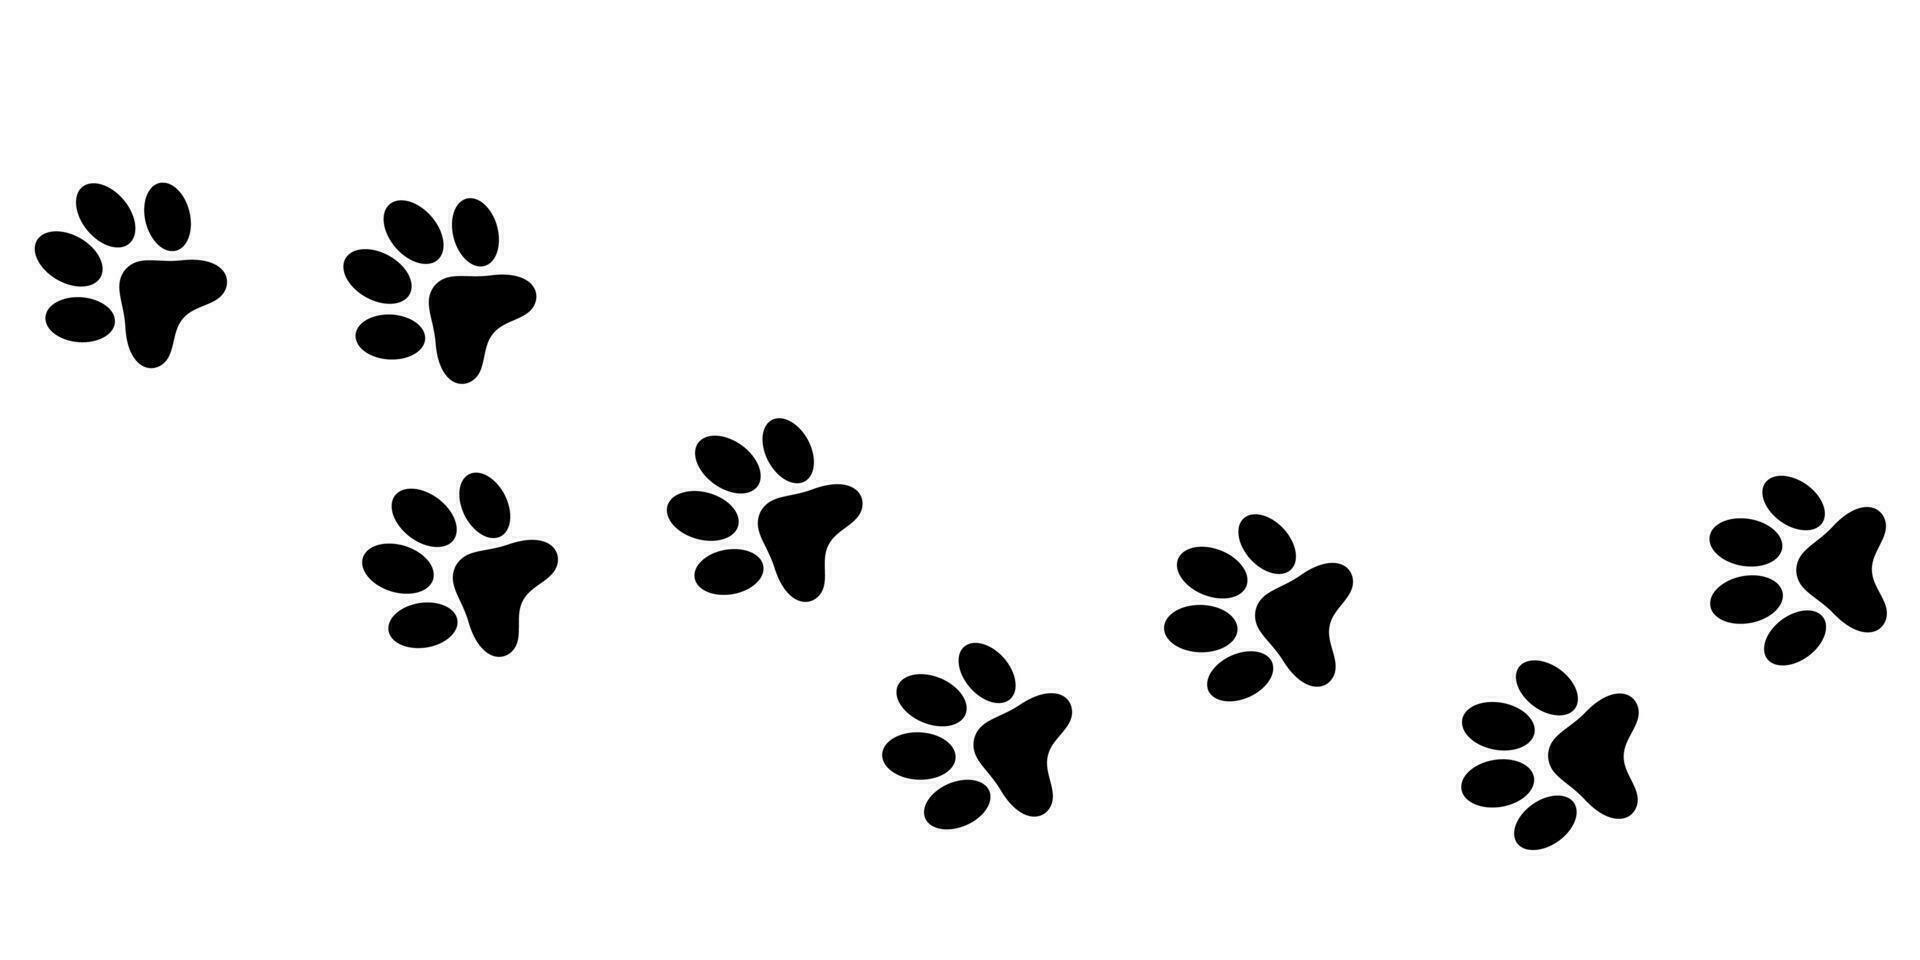 Dog paws. Animal paw prints, vector different animals footprints black on white illustration. Dog, puppy silhouette animal diagonal tracks.